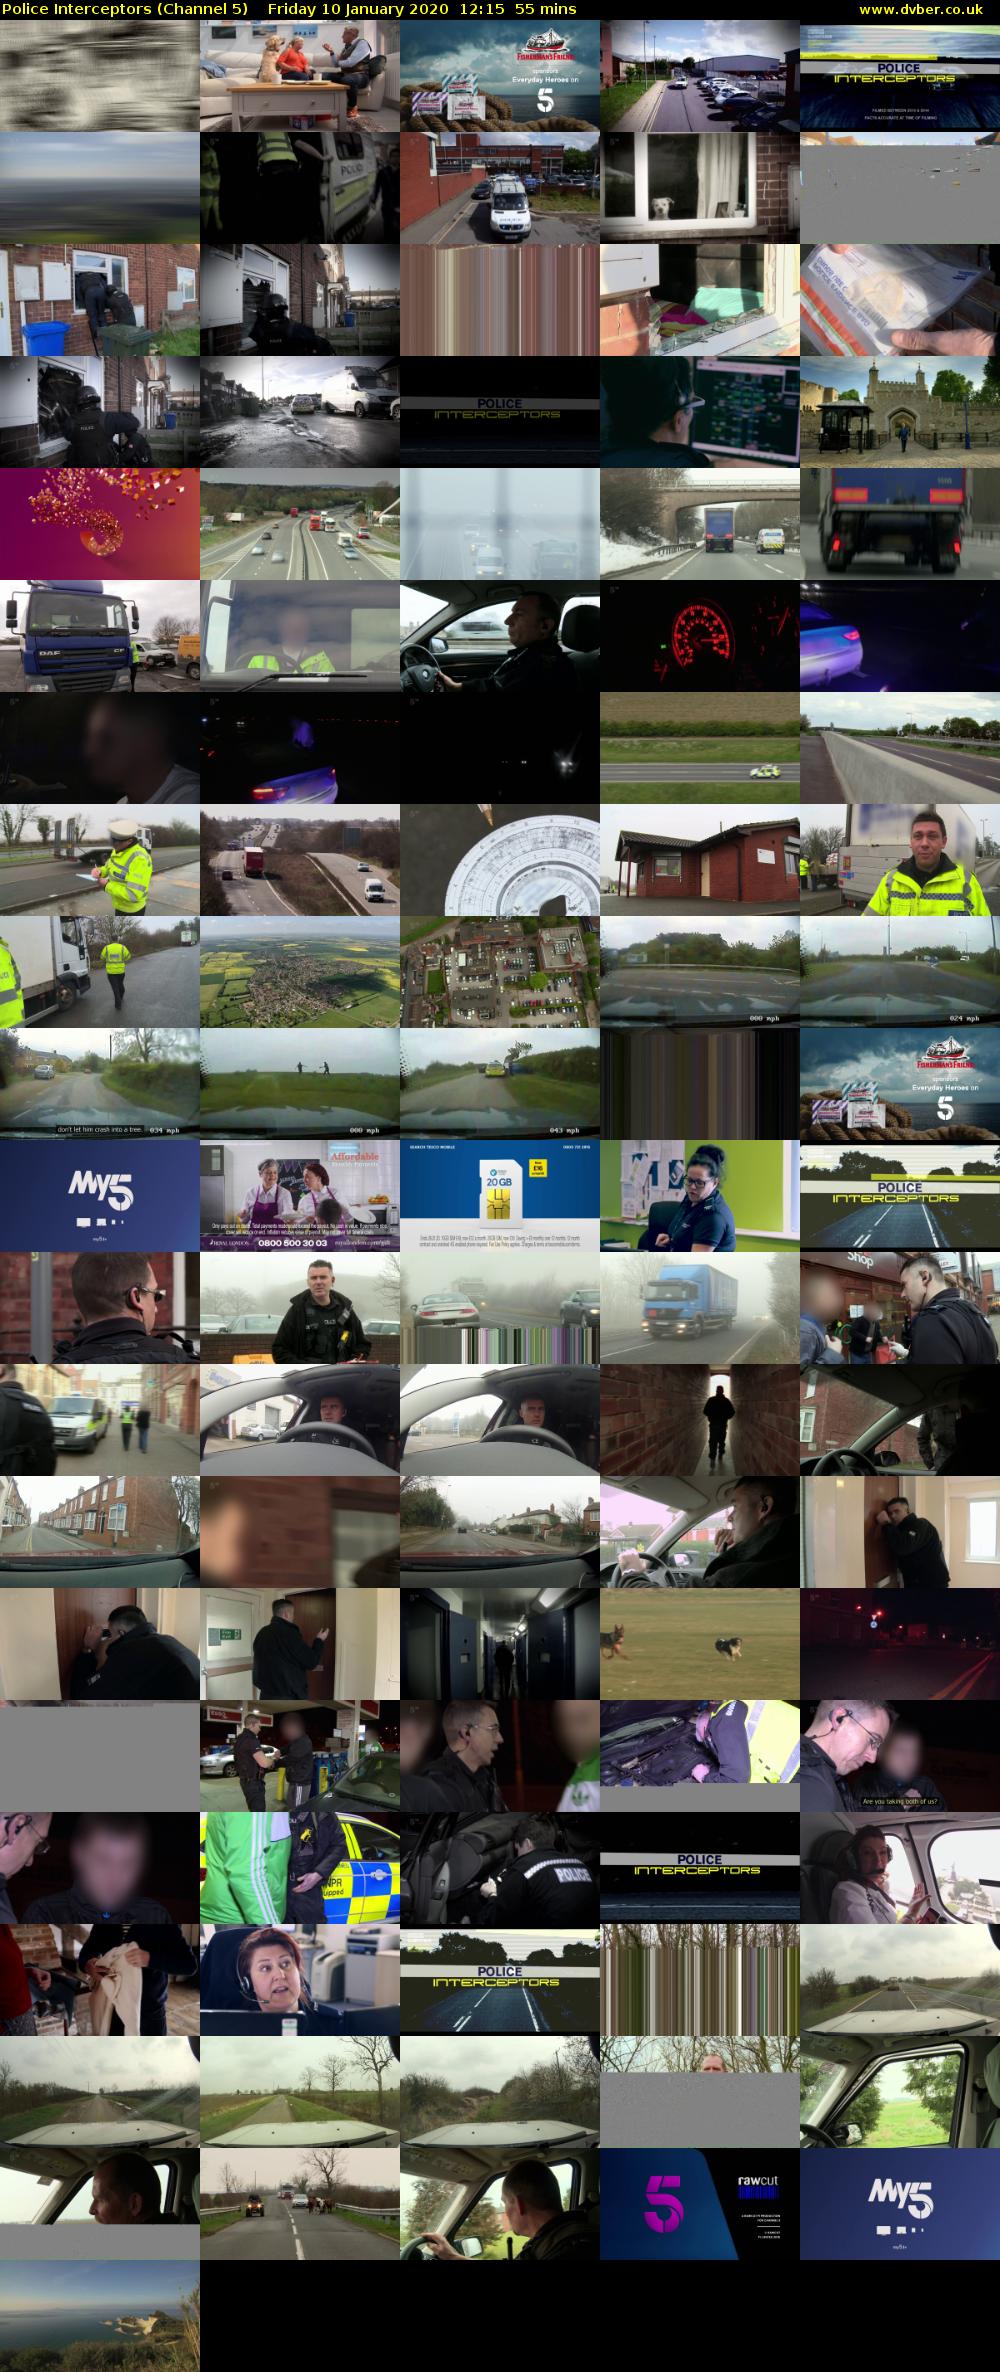 Police Interceptors (Channel 5) Friday 10 January 2020 12:15 - 13:10